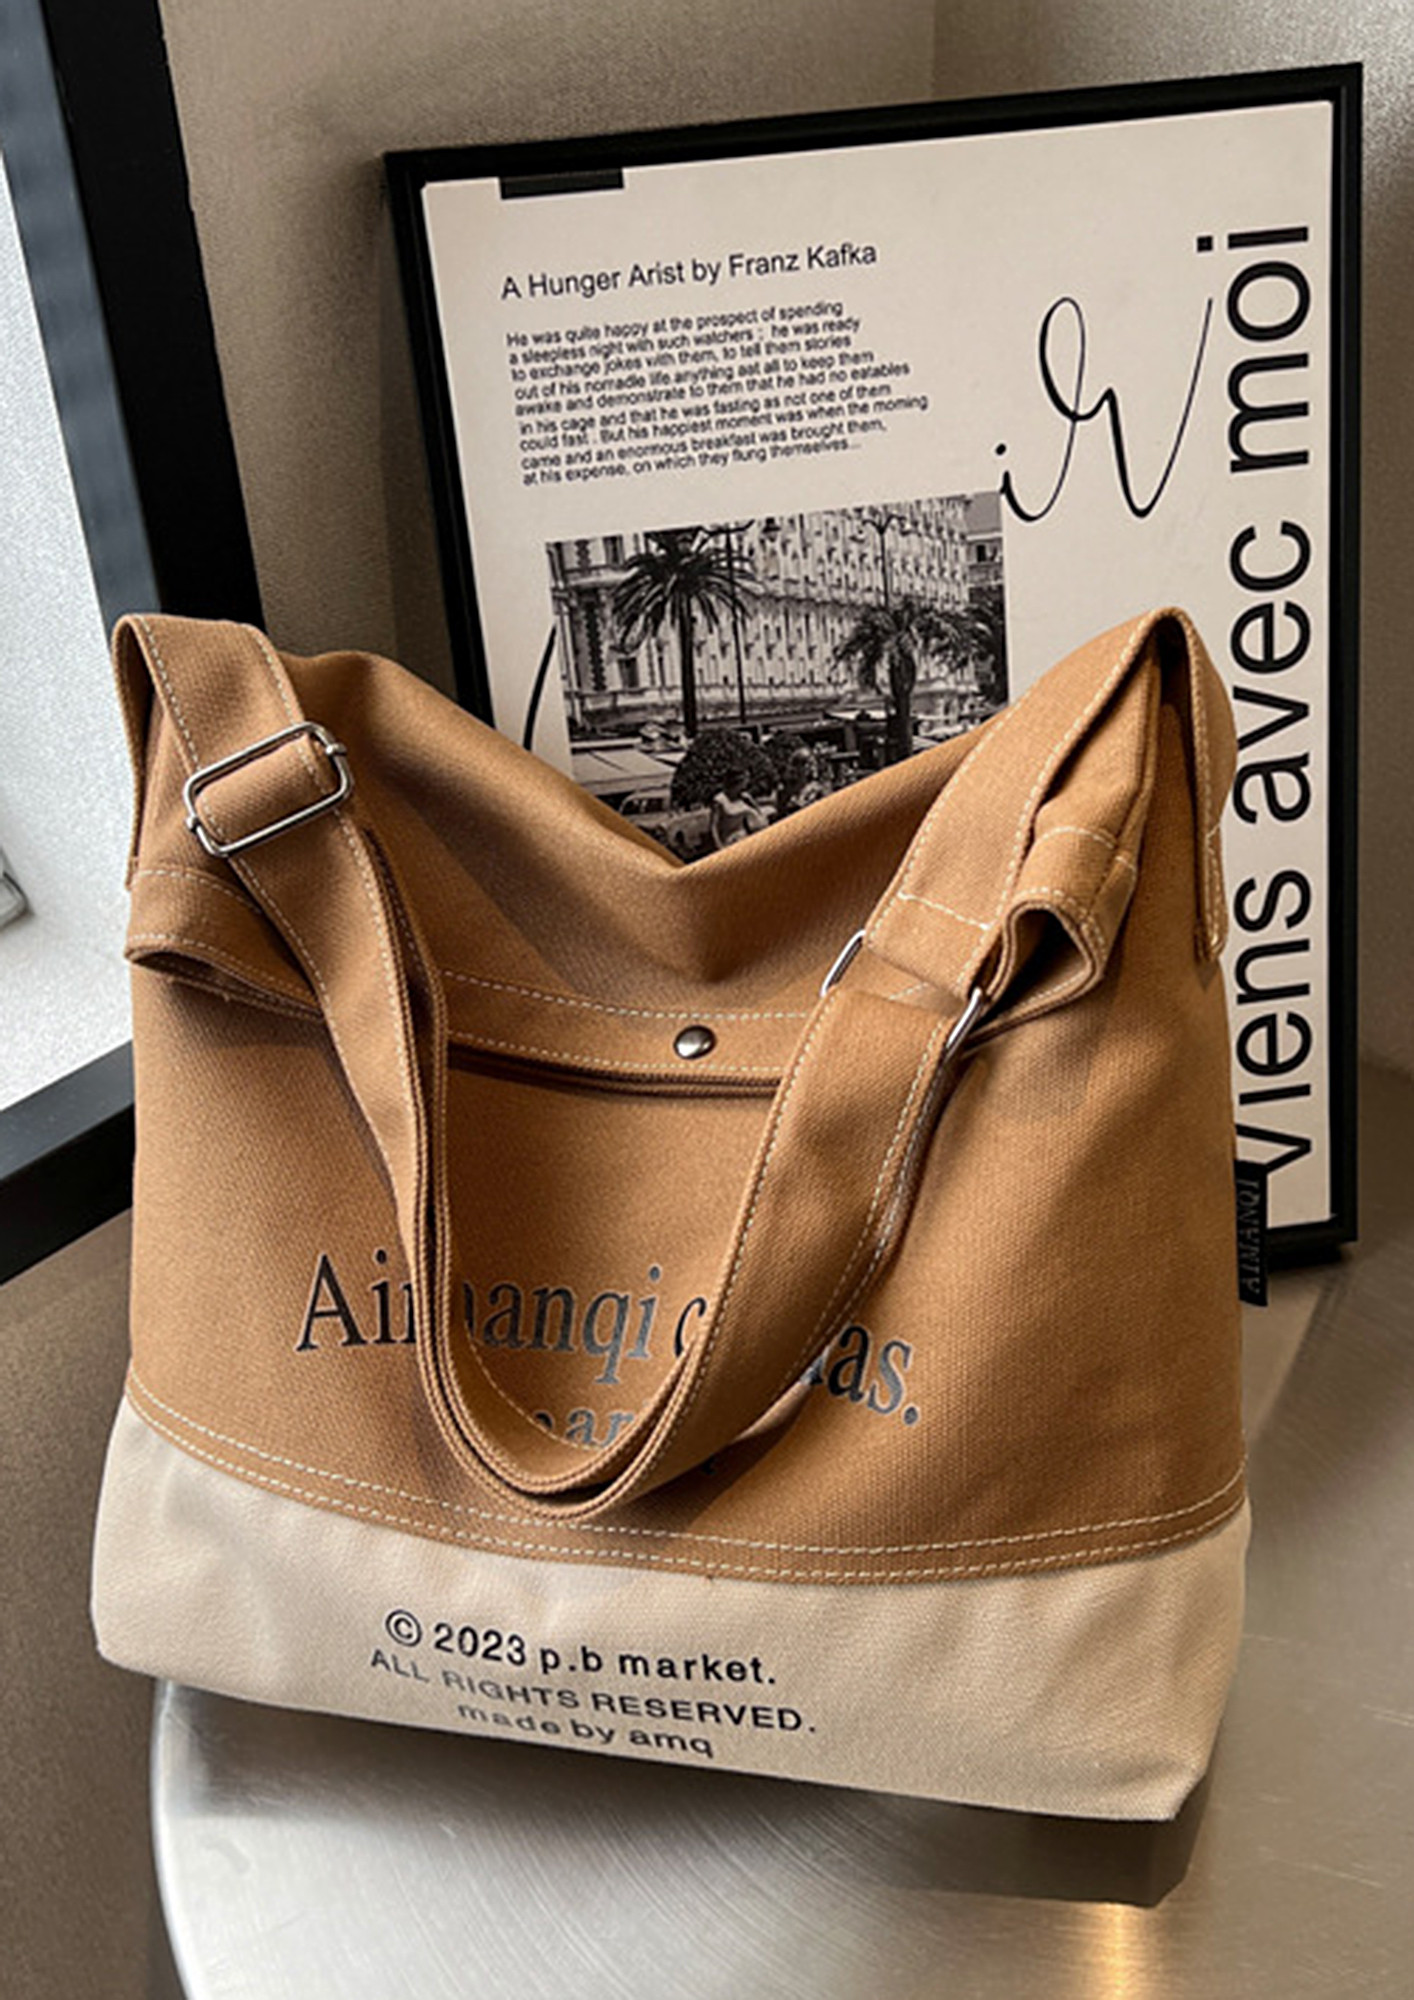 Buy pink mini panda bag| Ajss collection bag|school bag at Amazon.in